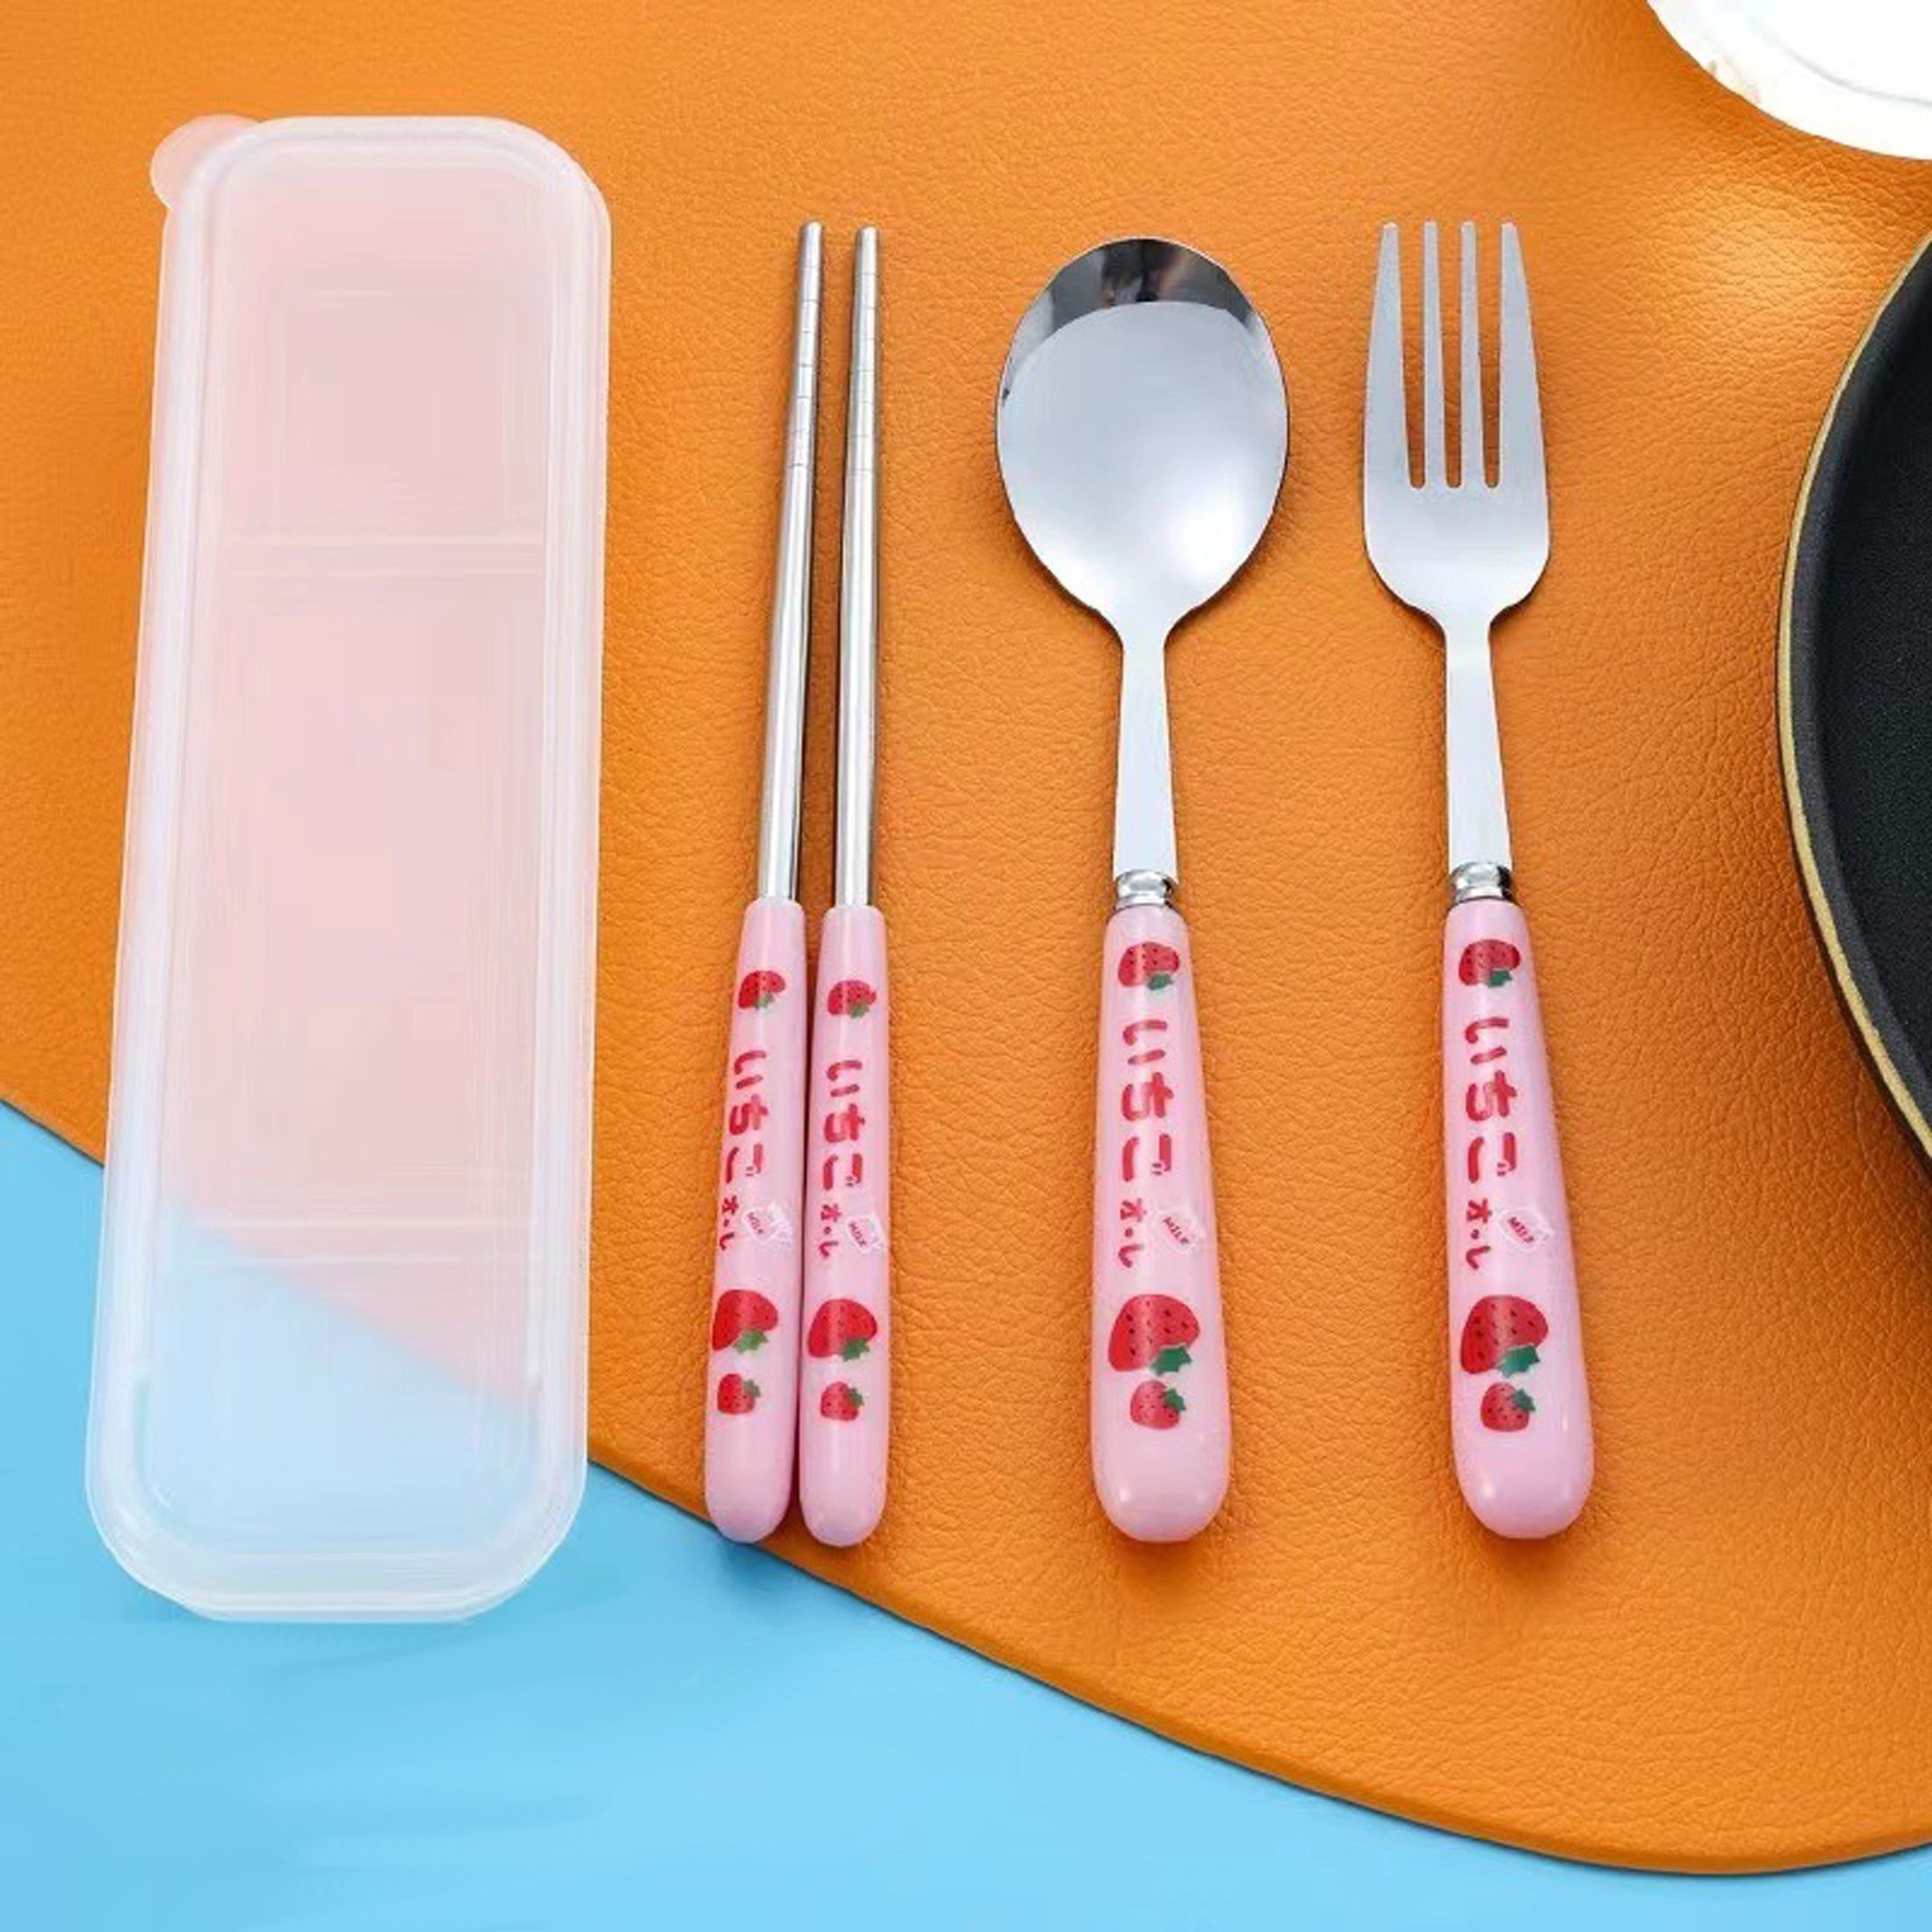 Travel Camping Cutlery Set, 8-Piece Knife Fork Spoon Chopsticks